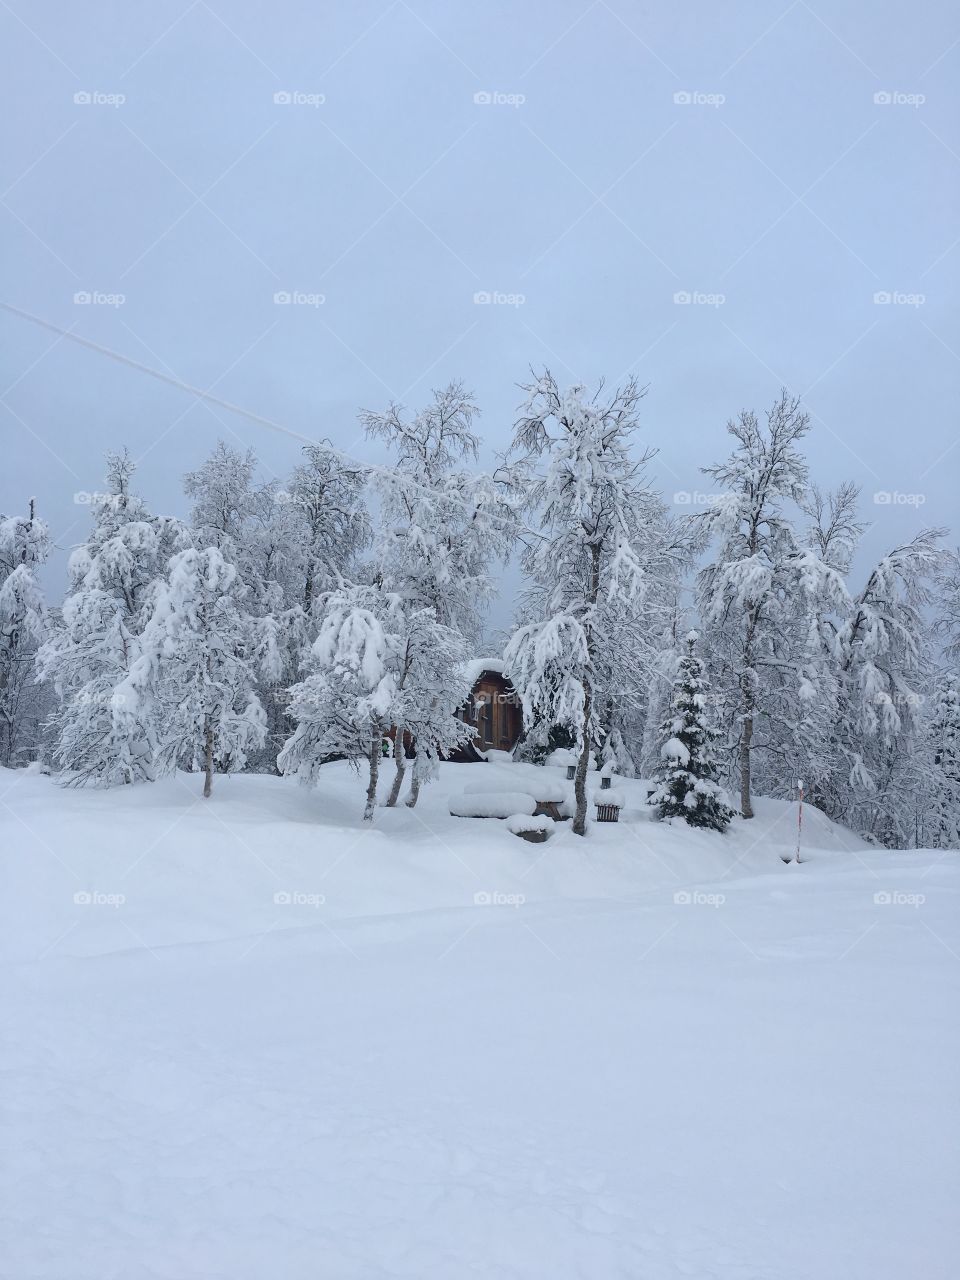 House in snowy landscape. 